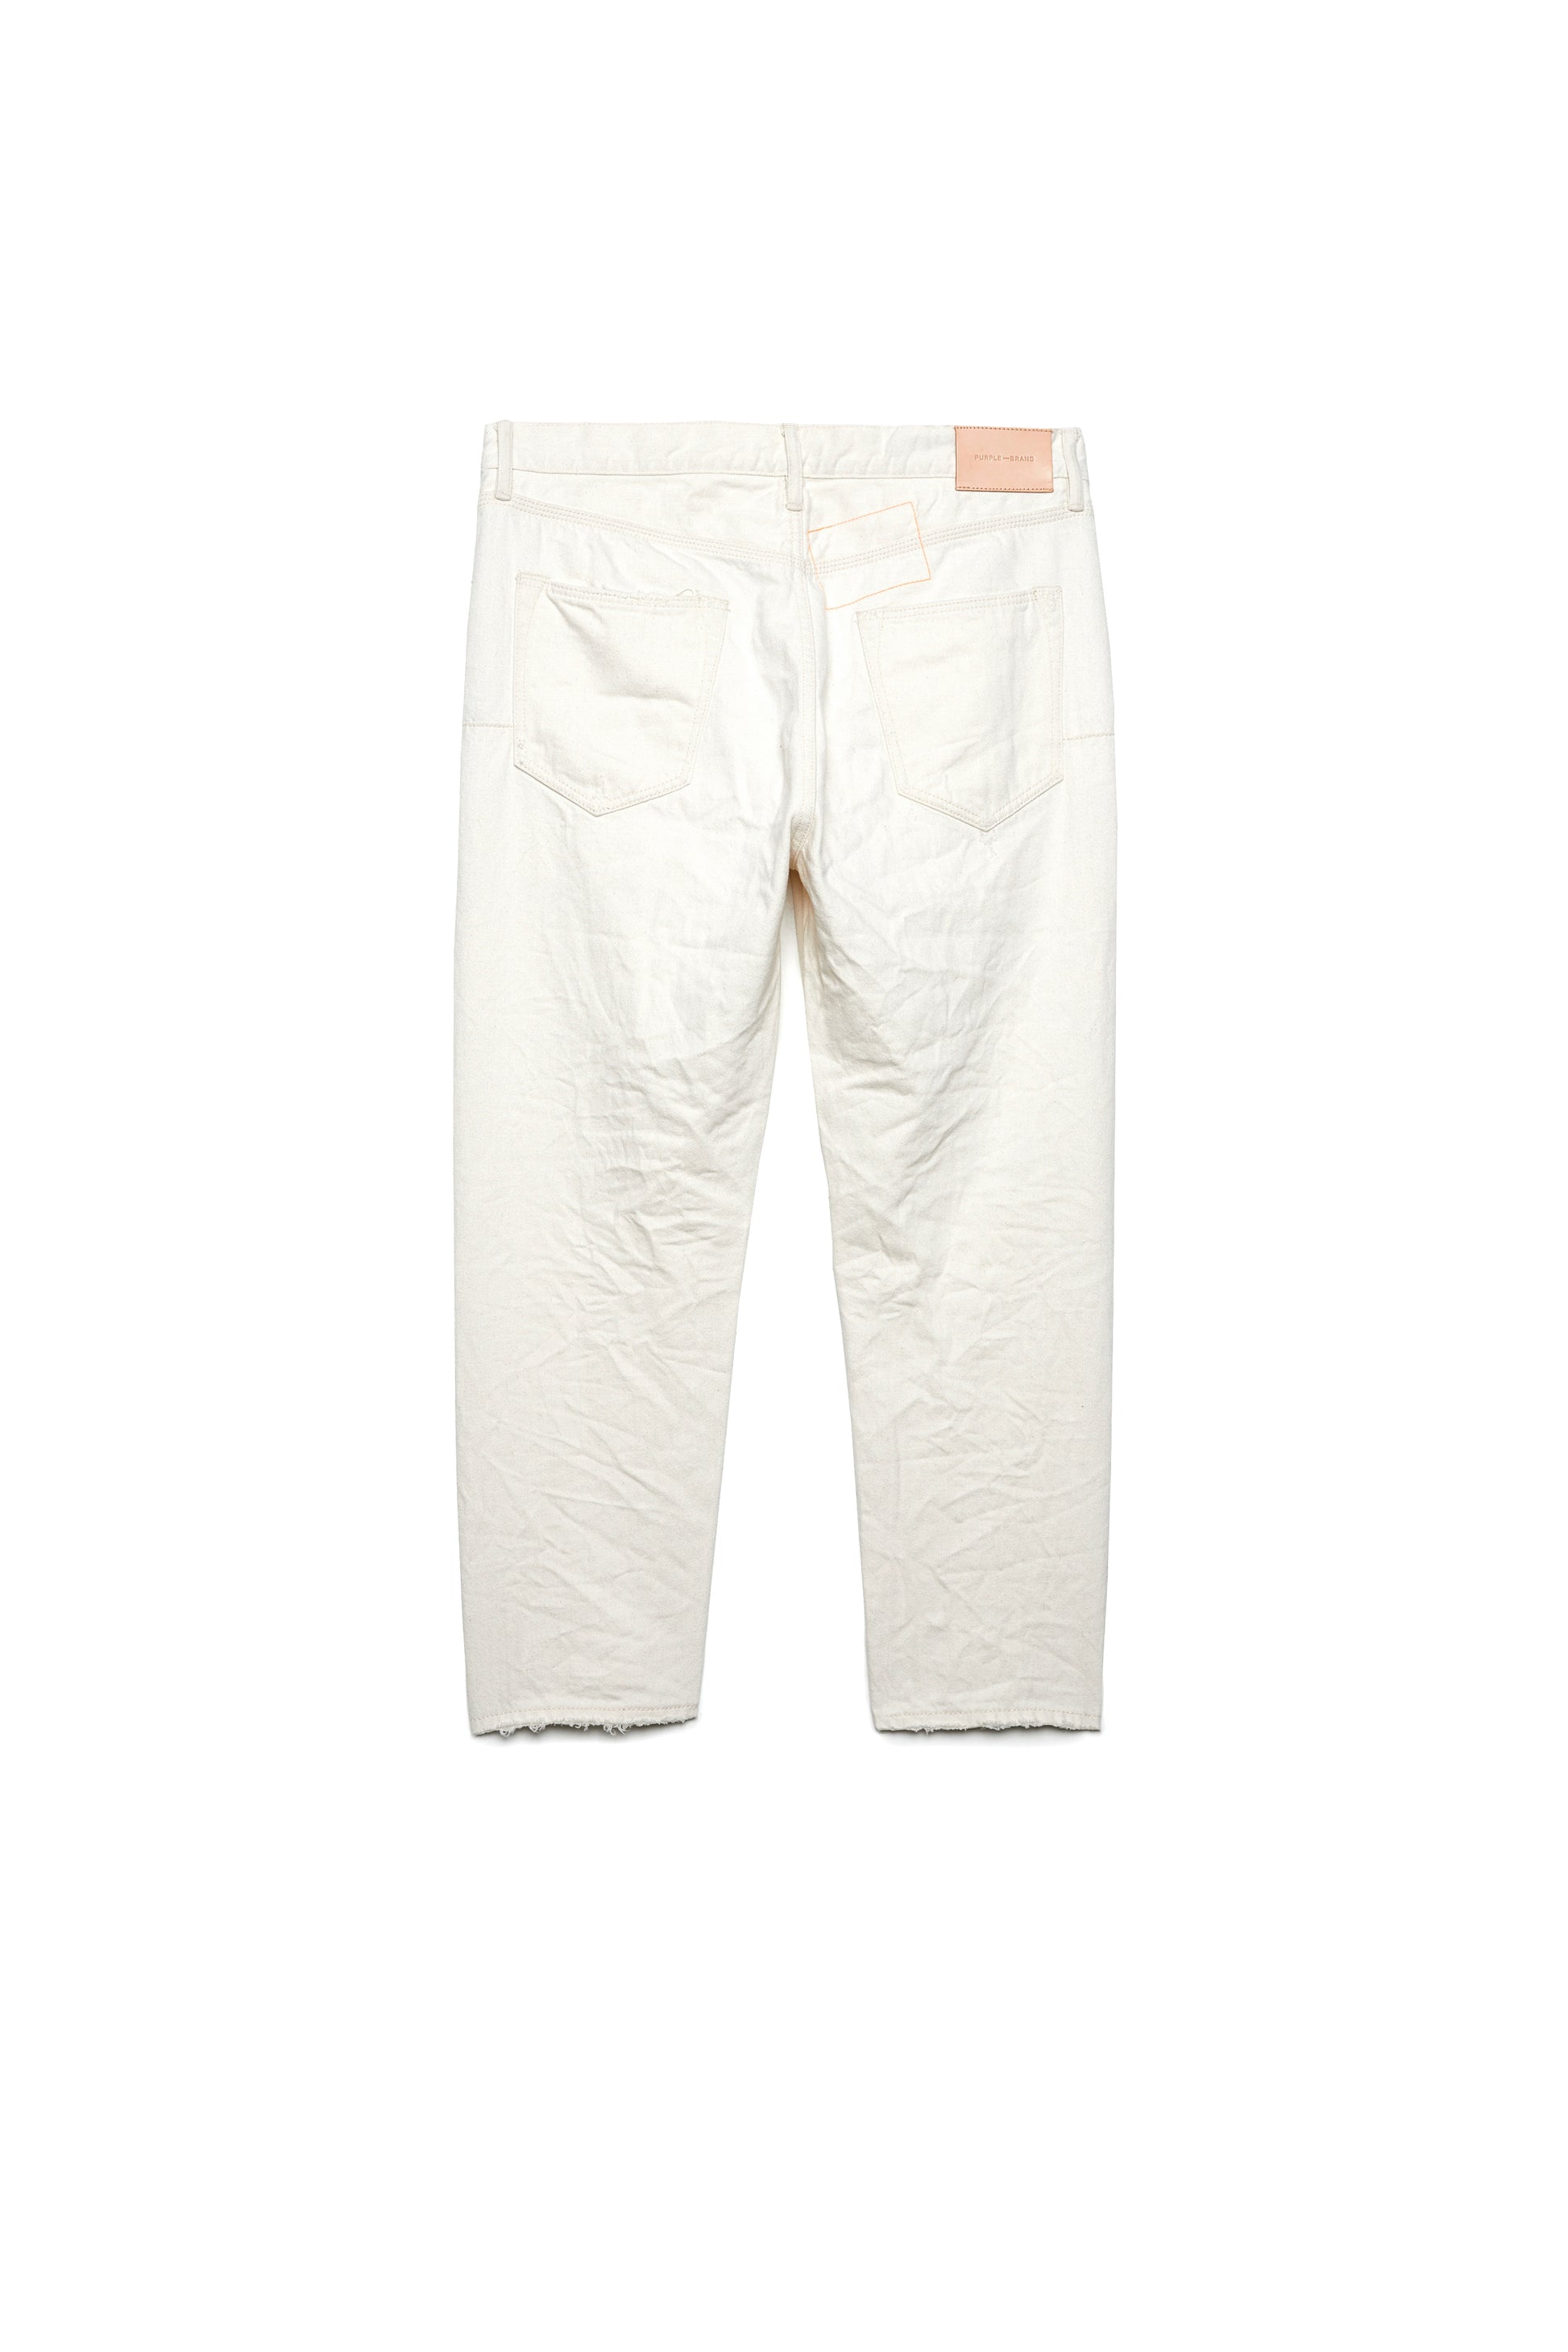 PURPLE BRAND - Men's Denim Jean - Long Rise Relaxed - Style No. P003 - White Vintage Distress Crop - Back